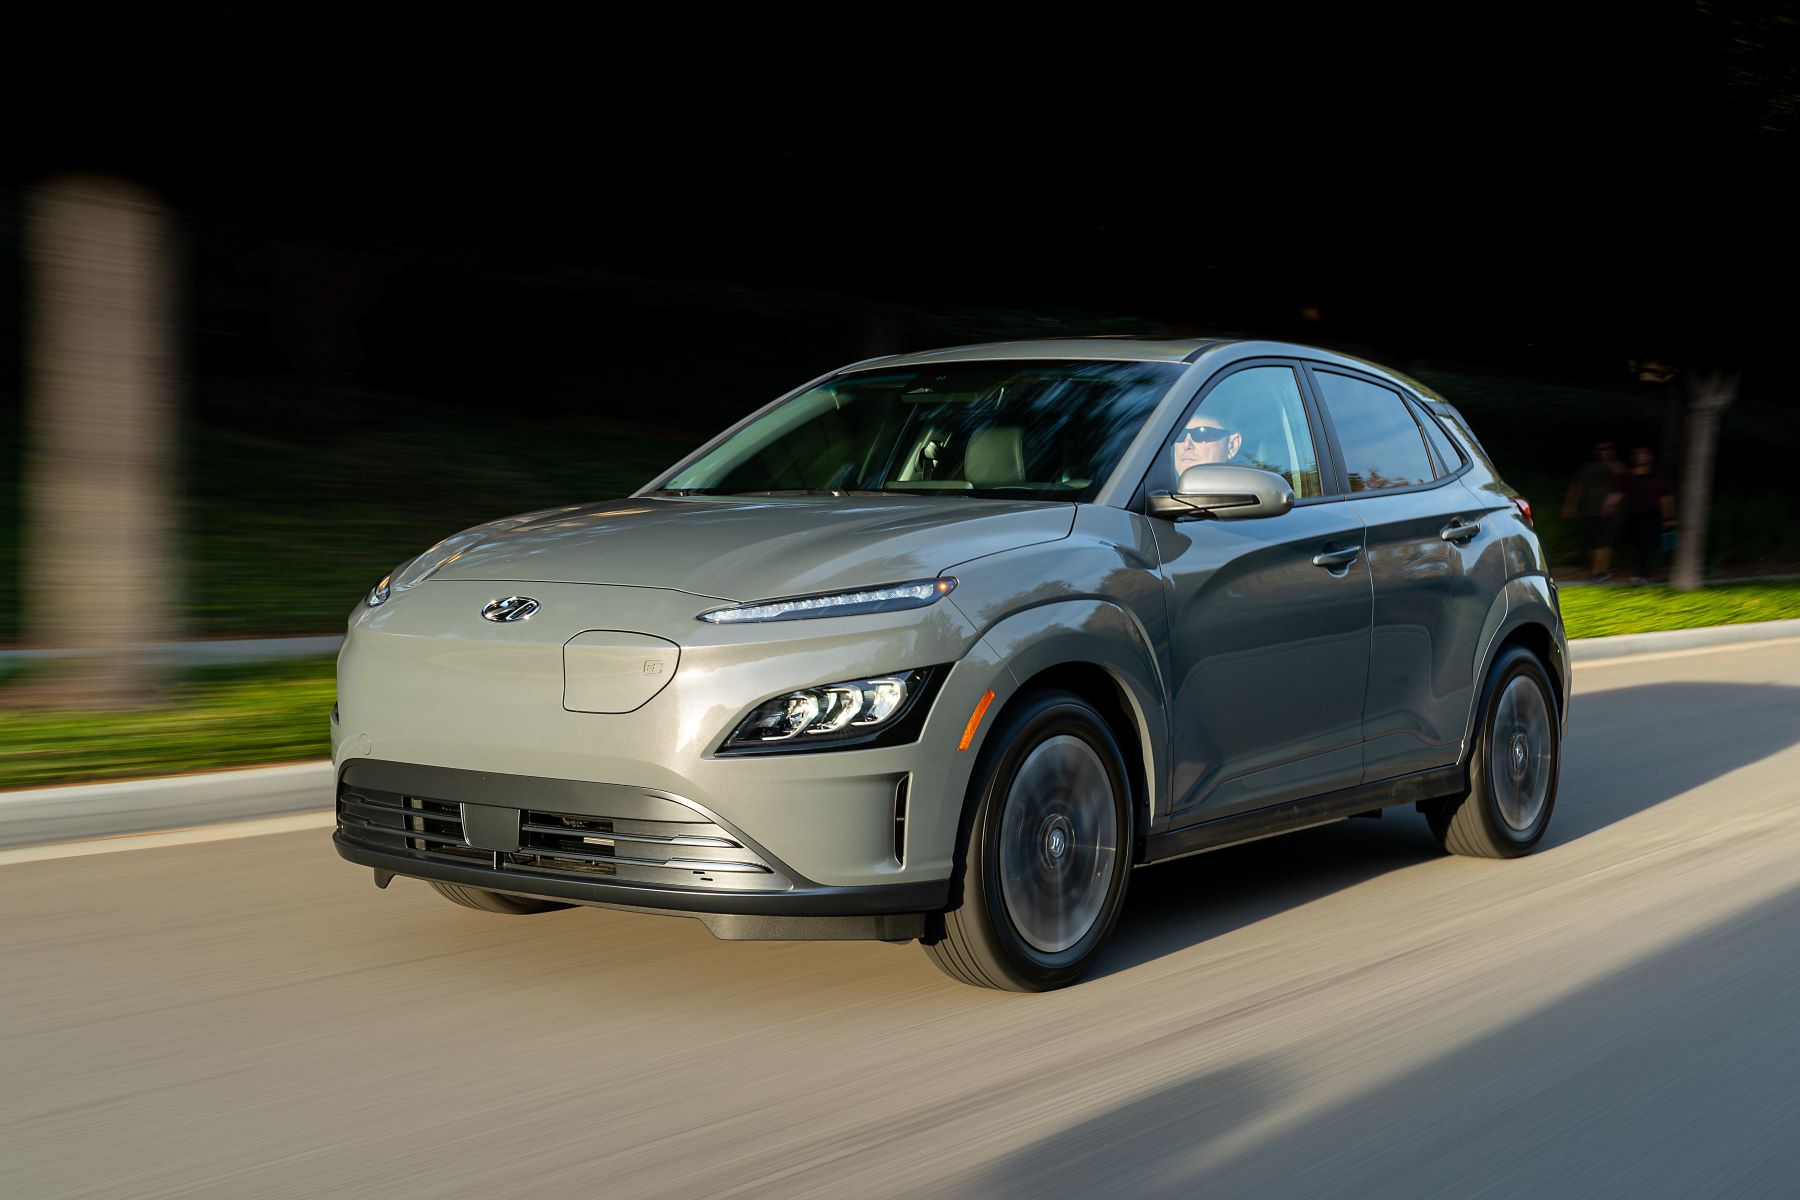 The 2022 Hyundai Kona Electric EV model in gray